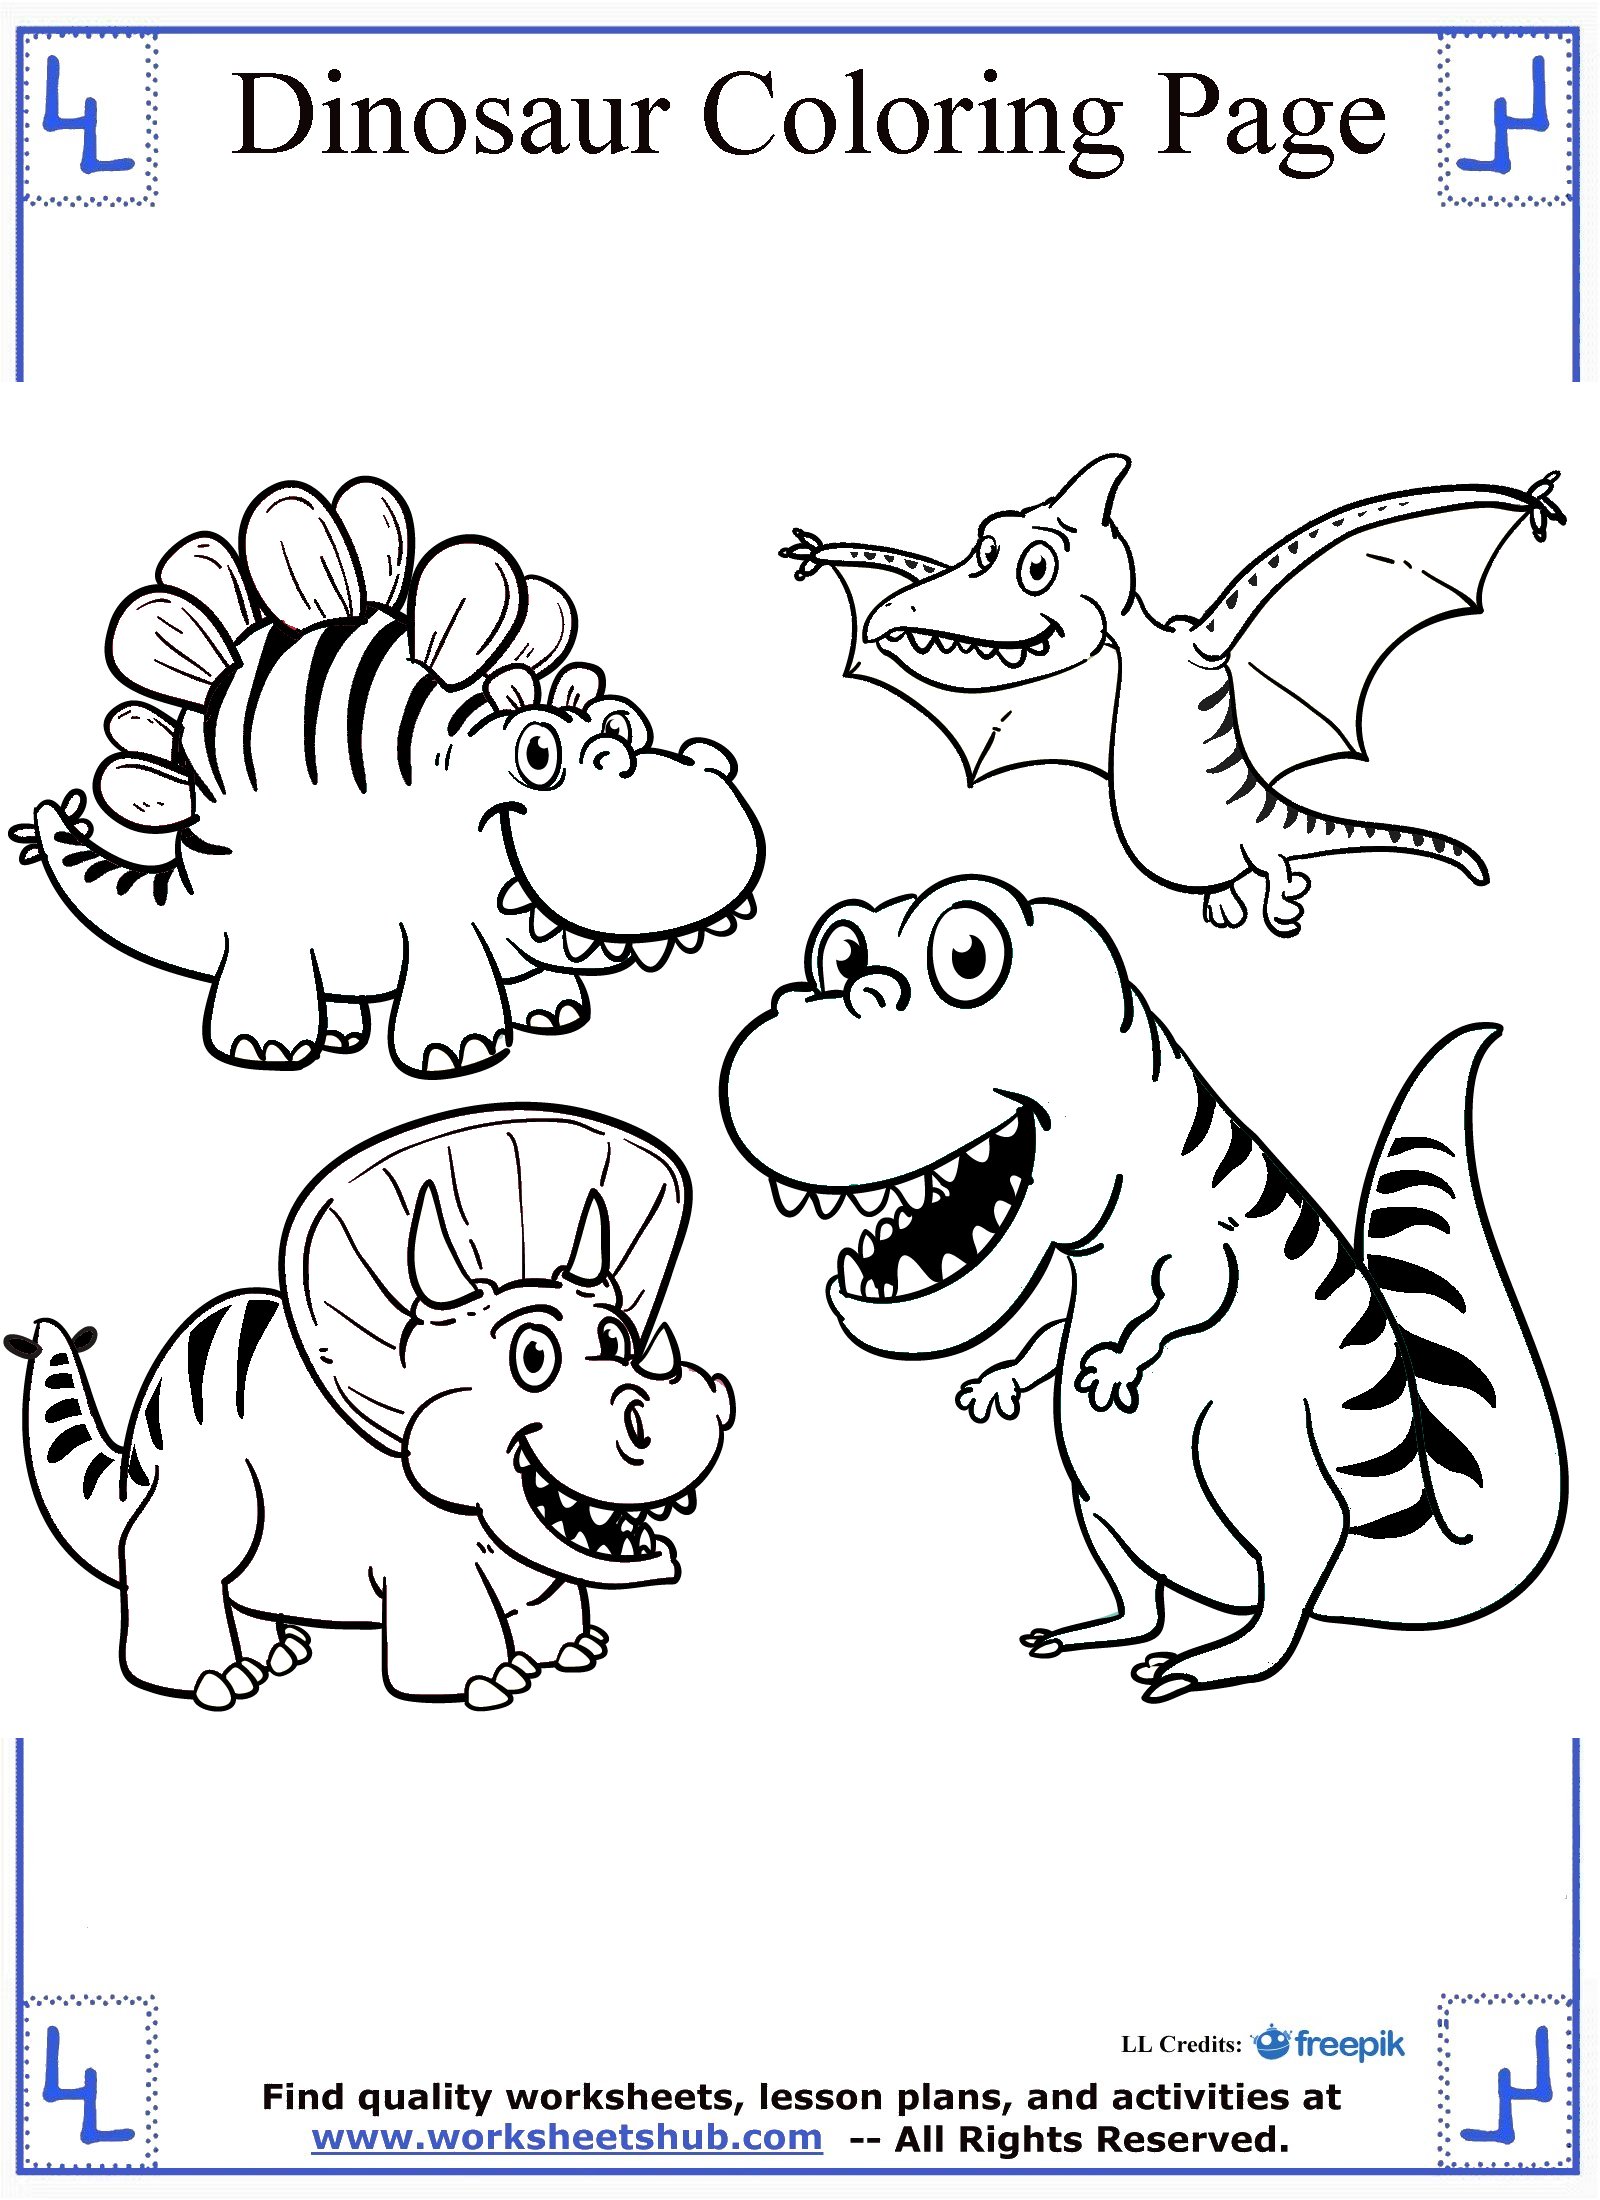 dinosaur-coloring-sheet-printable